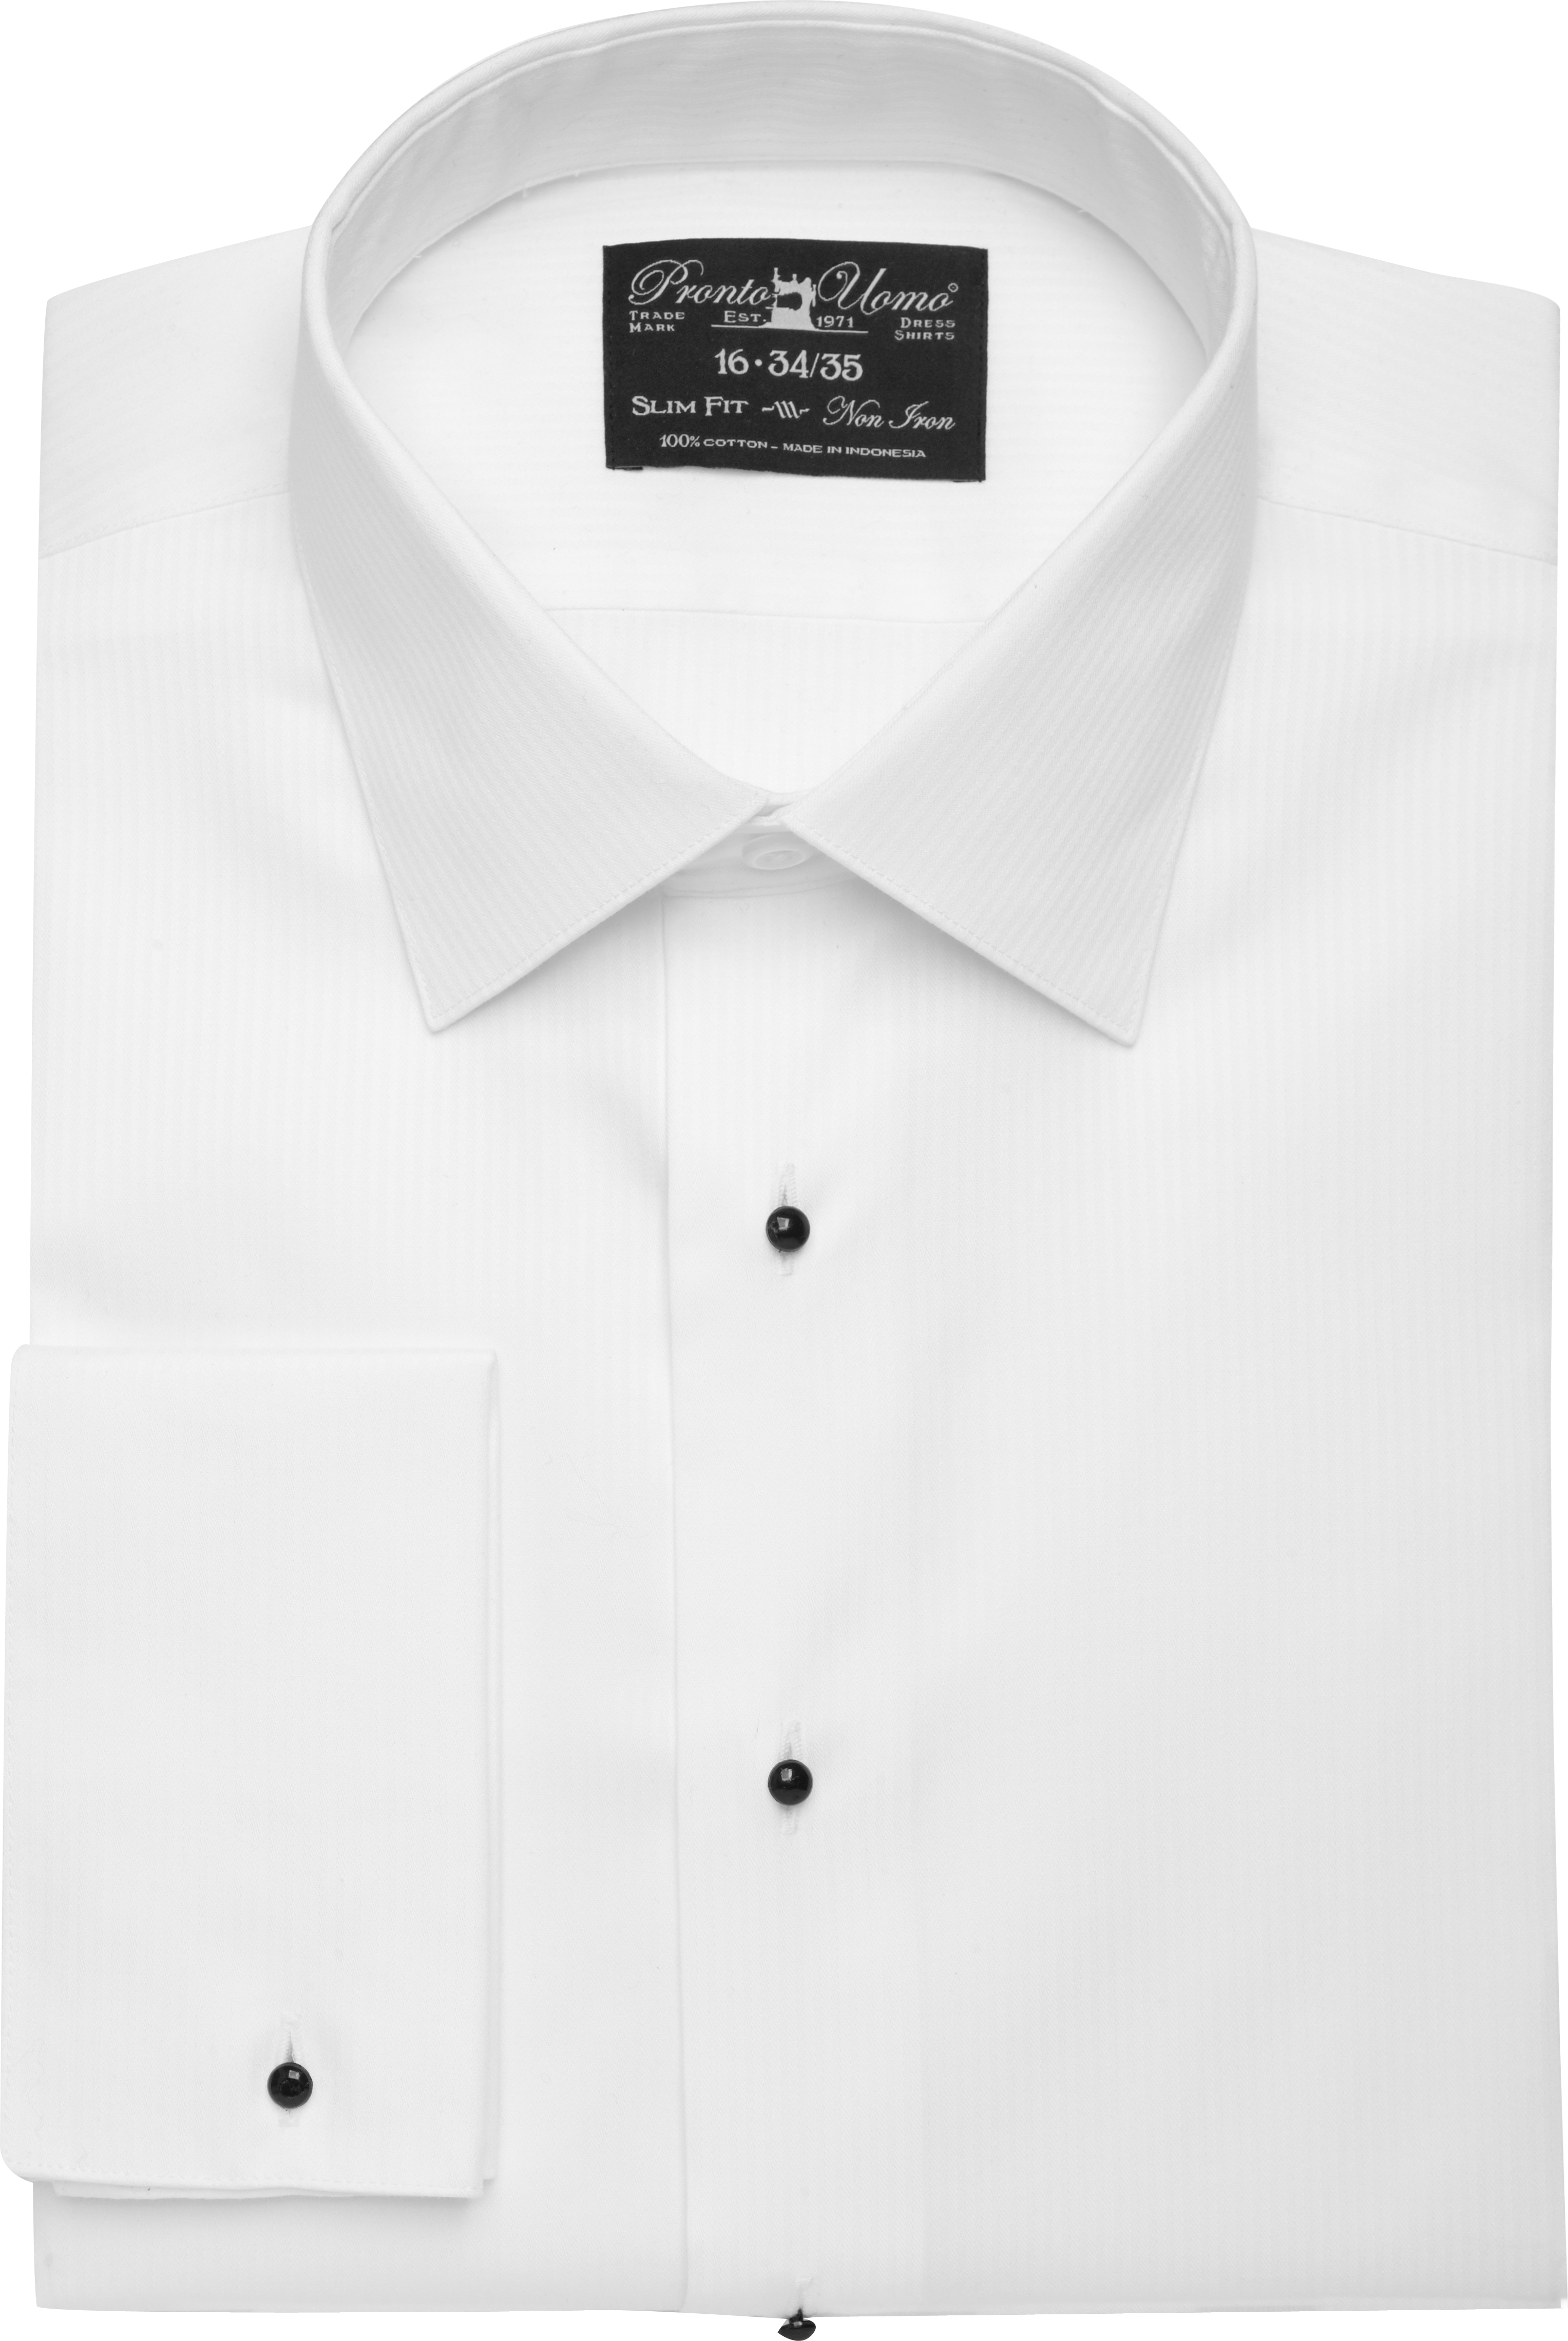 Pronto Uomo White Slim Fit Tuxedo Shirt - Men's Sale | Men's Wearhouse